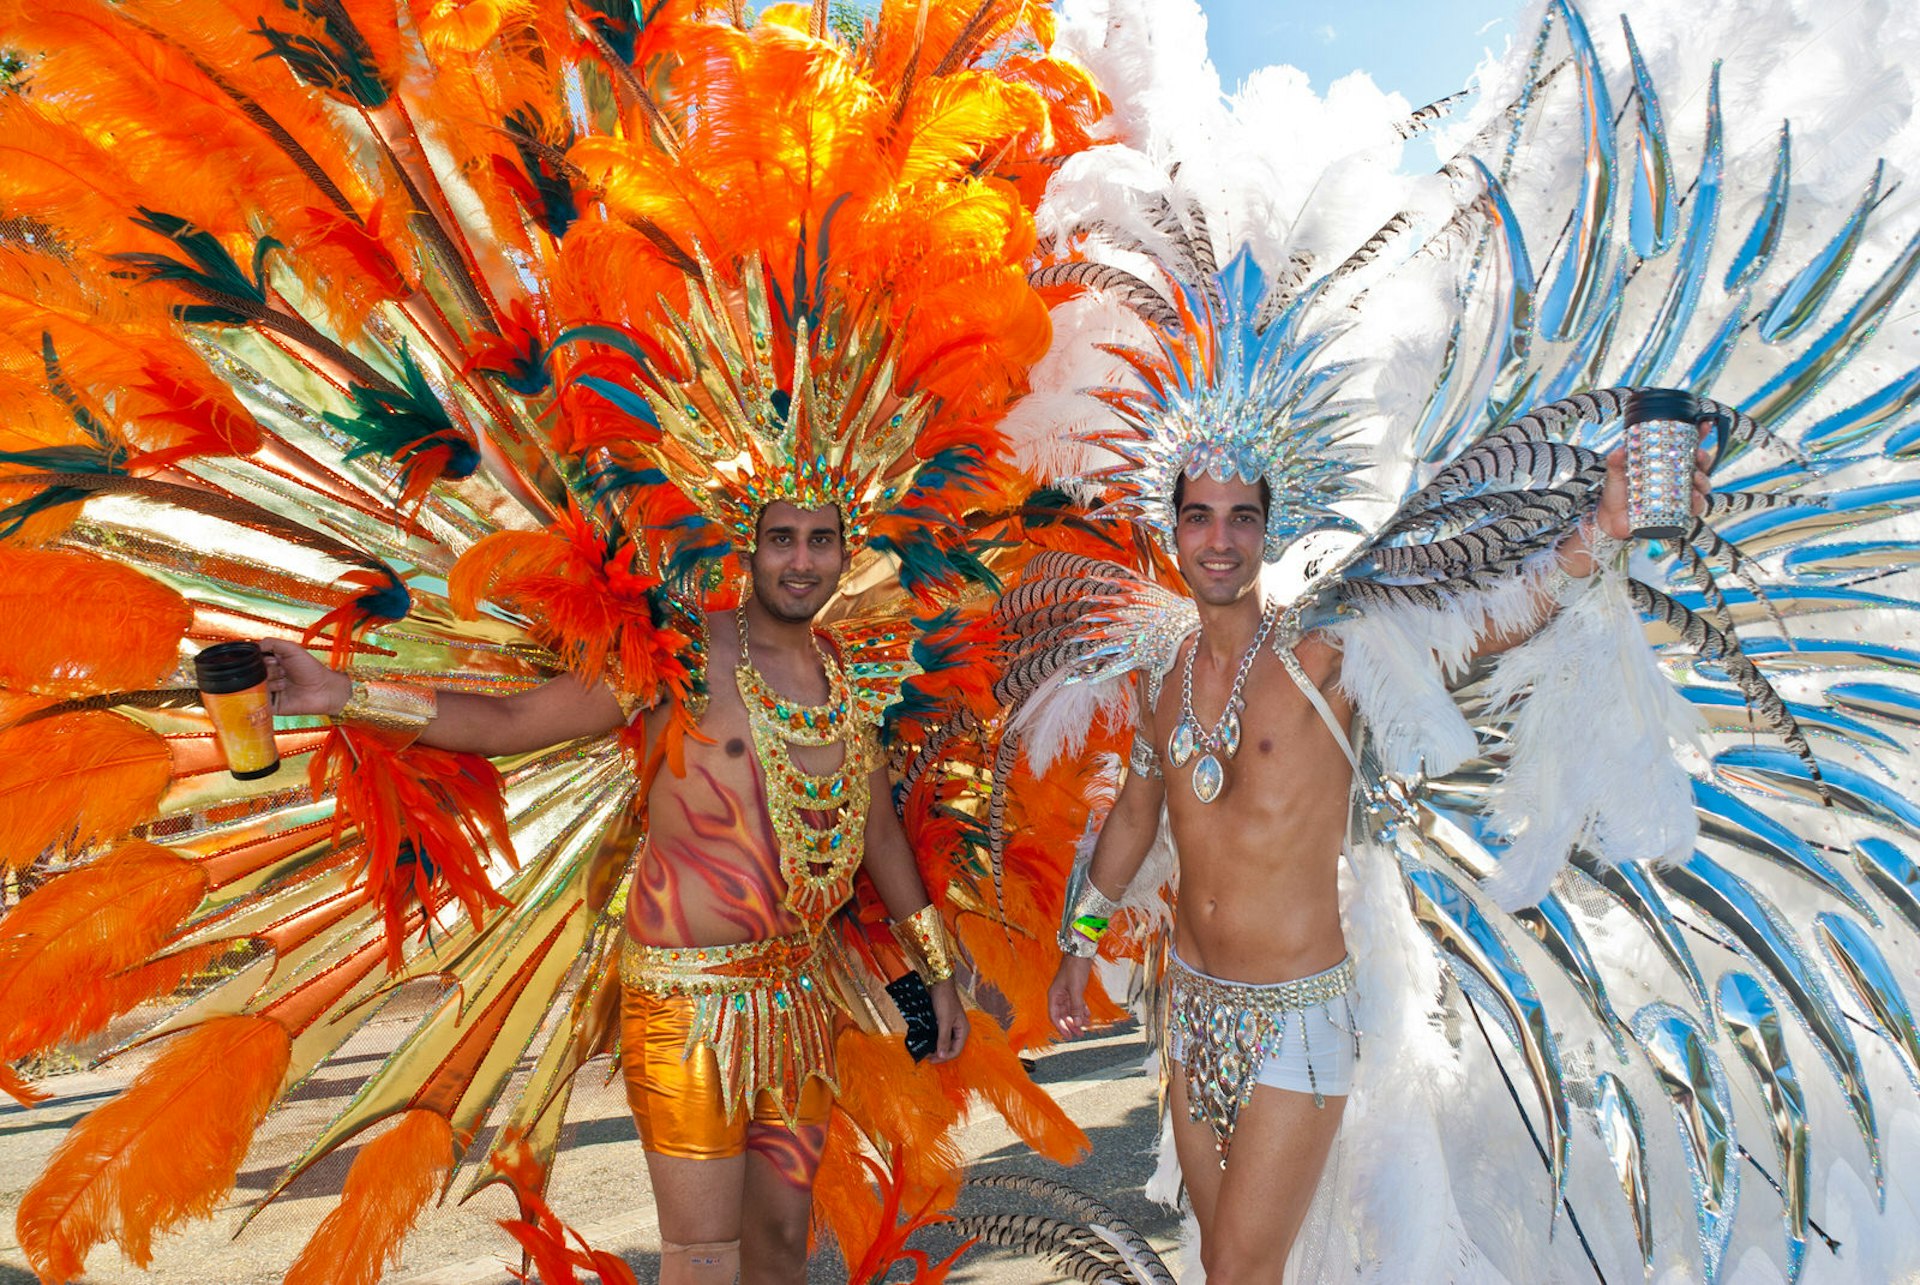 Masqueraders taking part in Trinidad & Tobago's carnival in Port of Spain